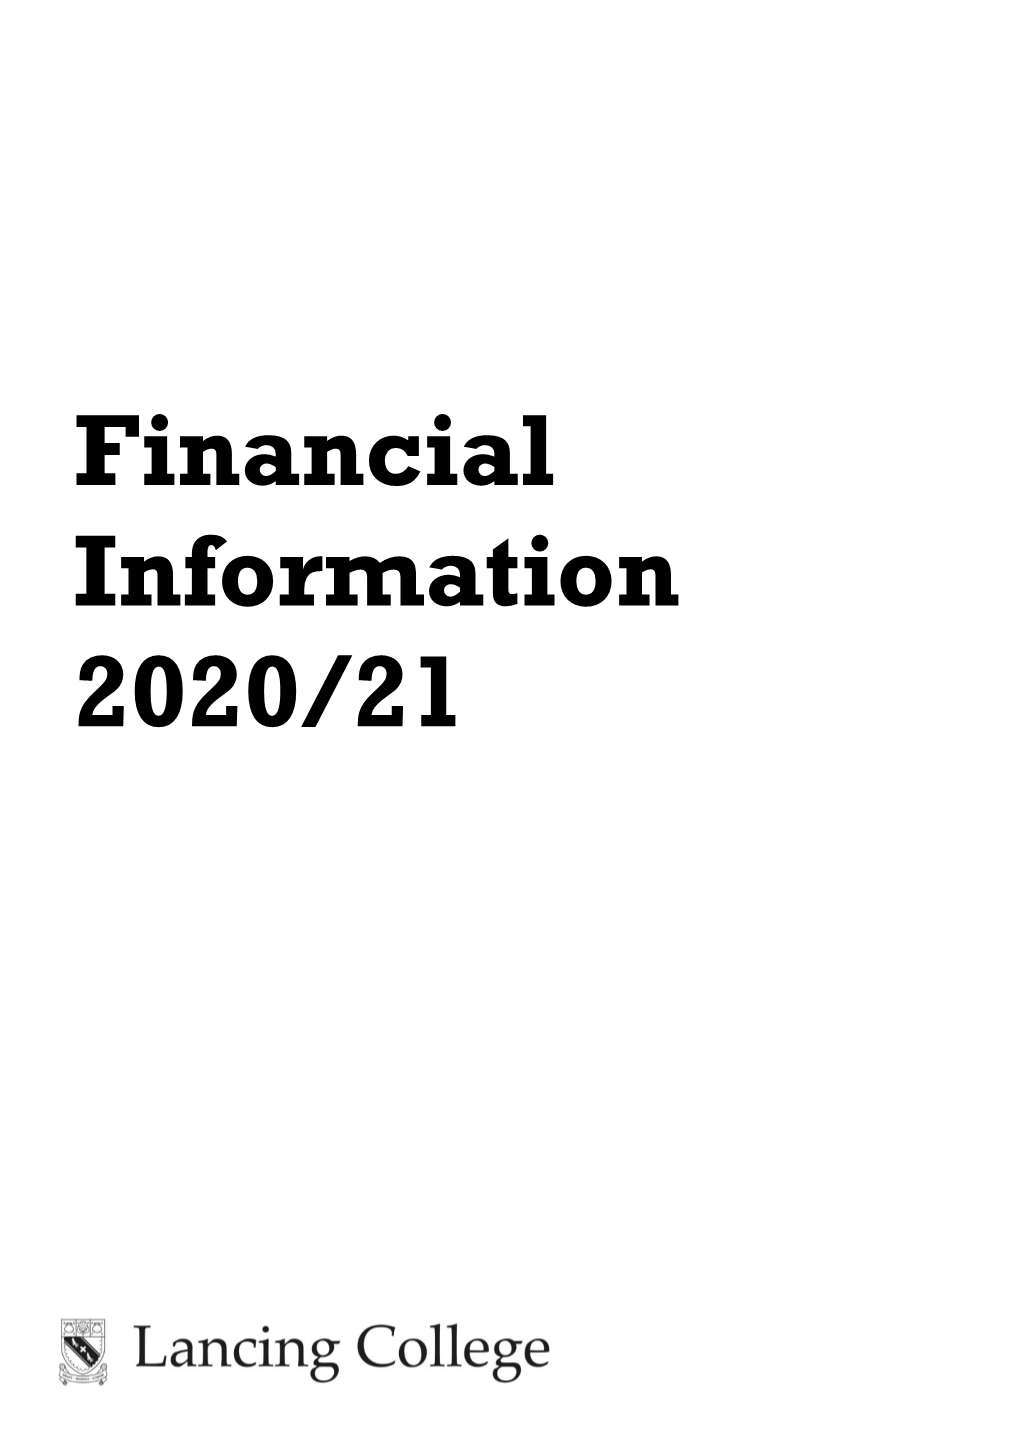 Financial Information 2020/21